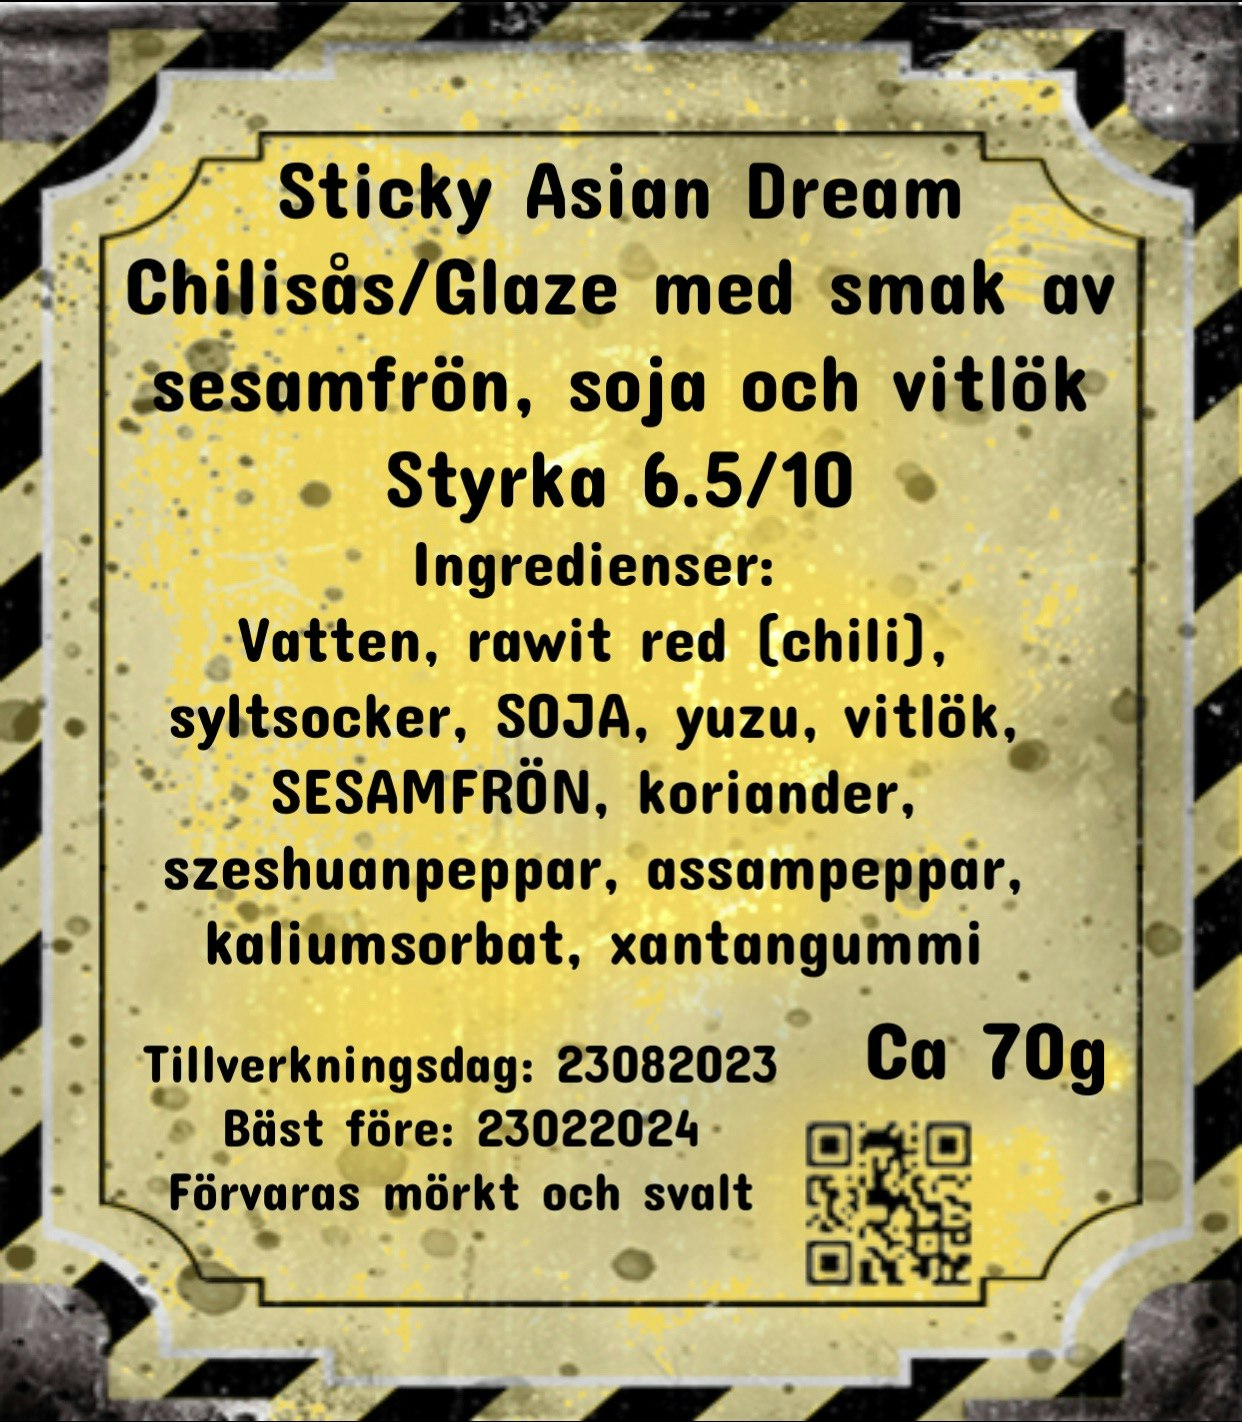 Sticky Asian Dream